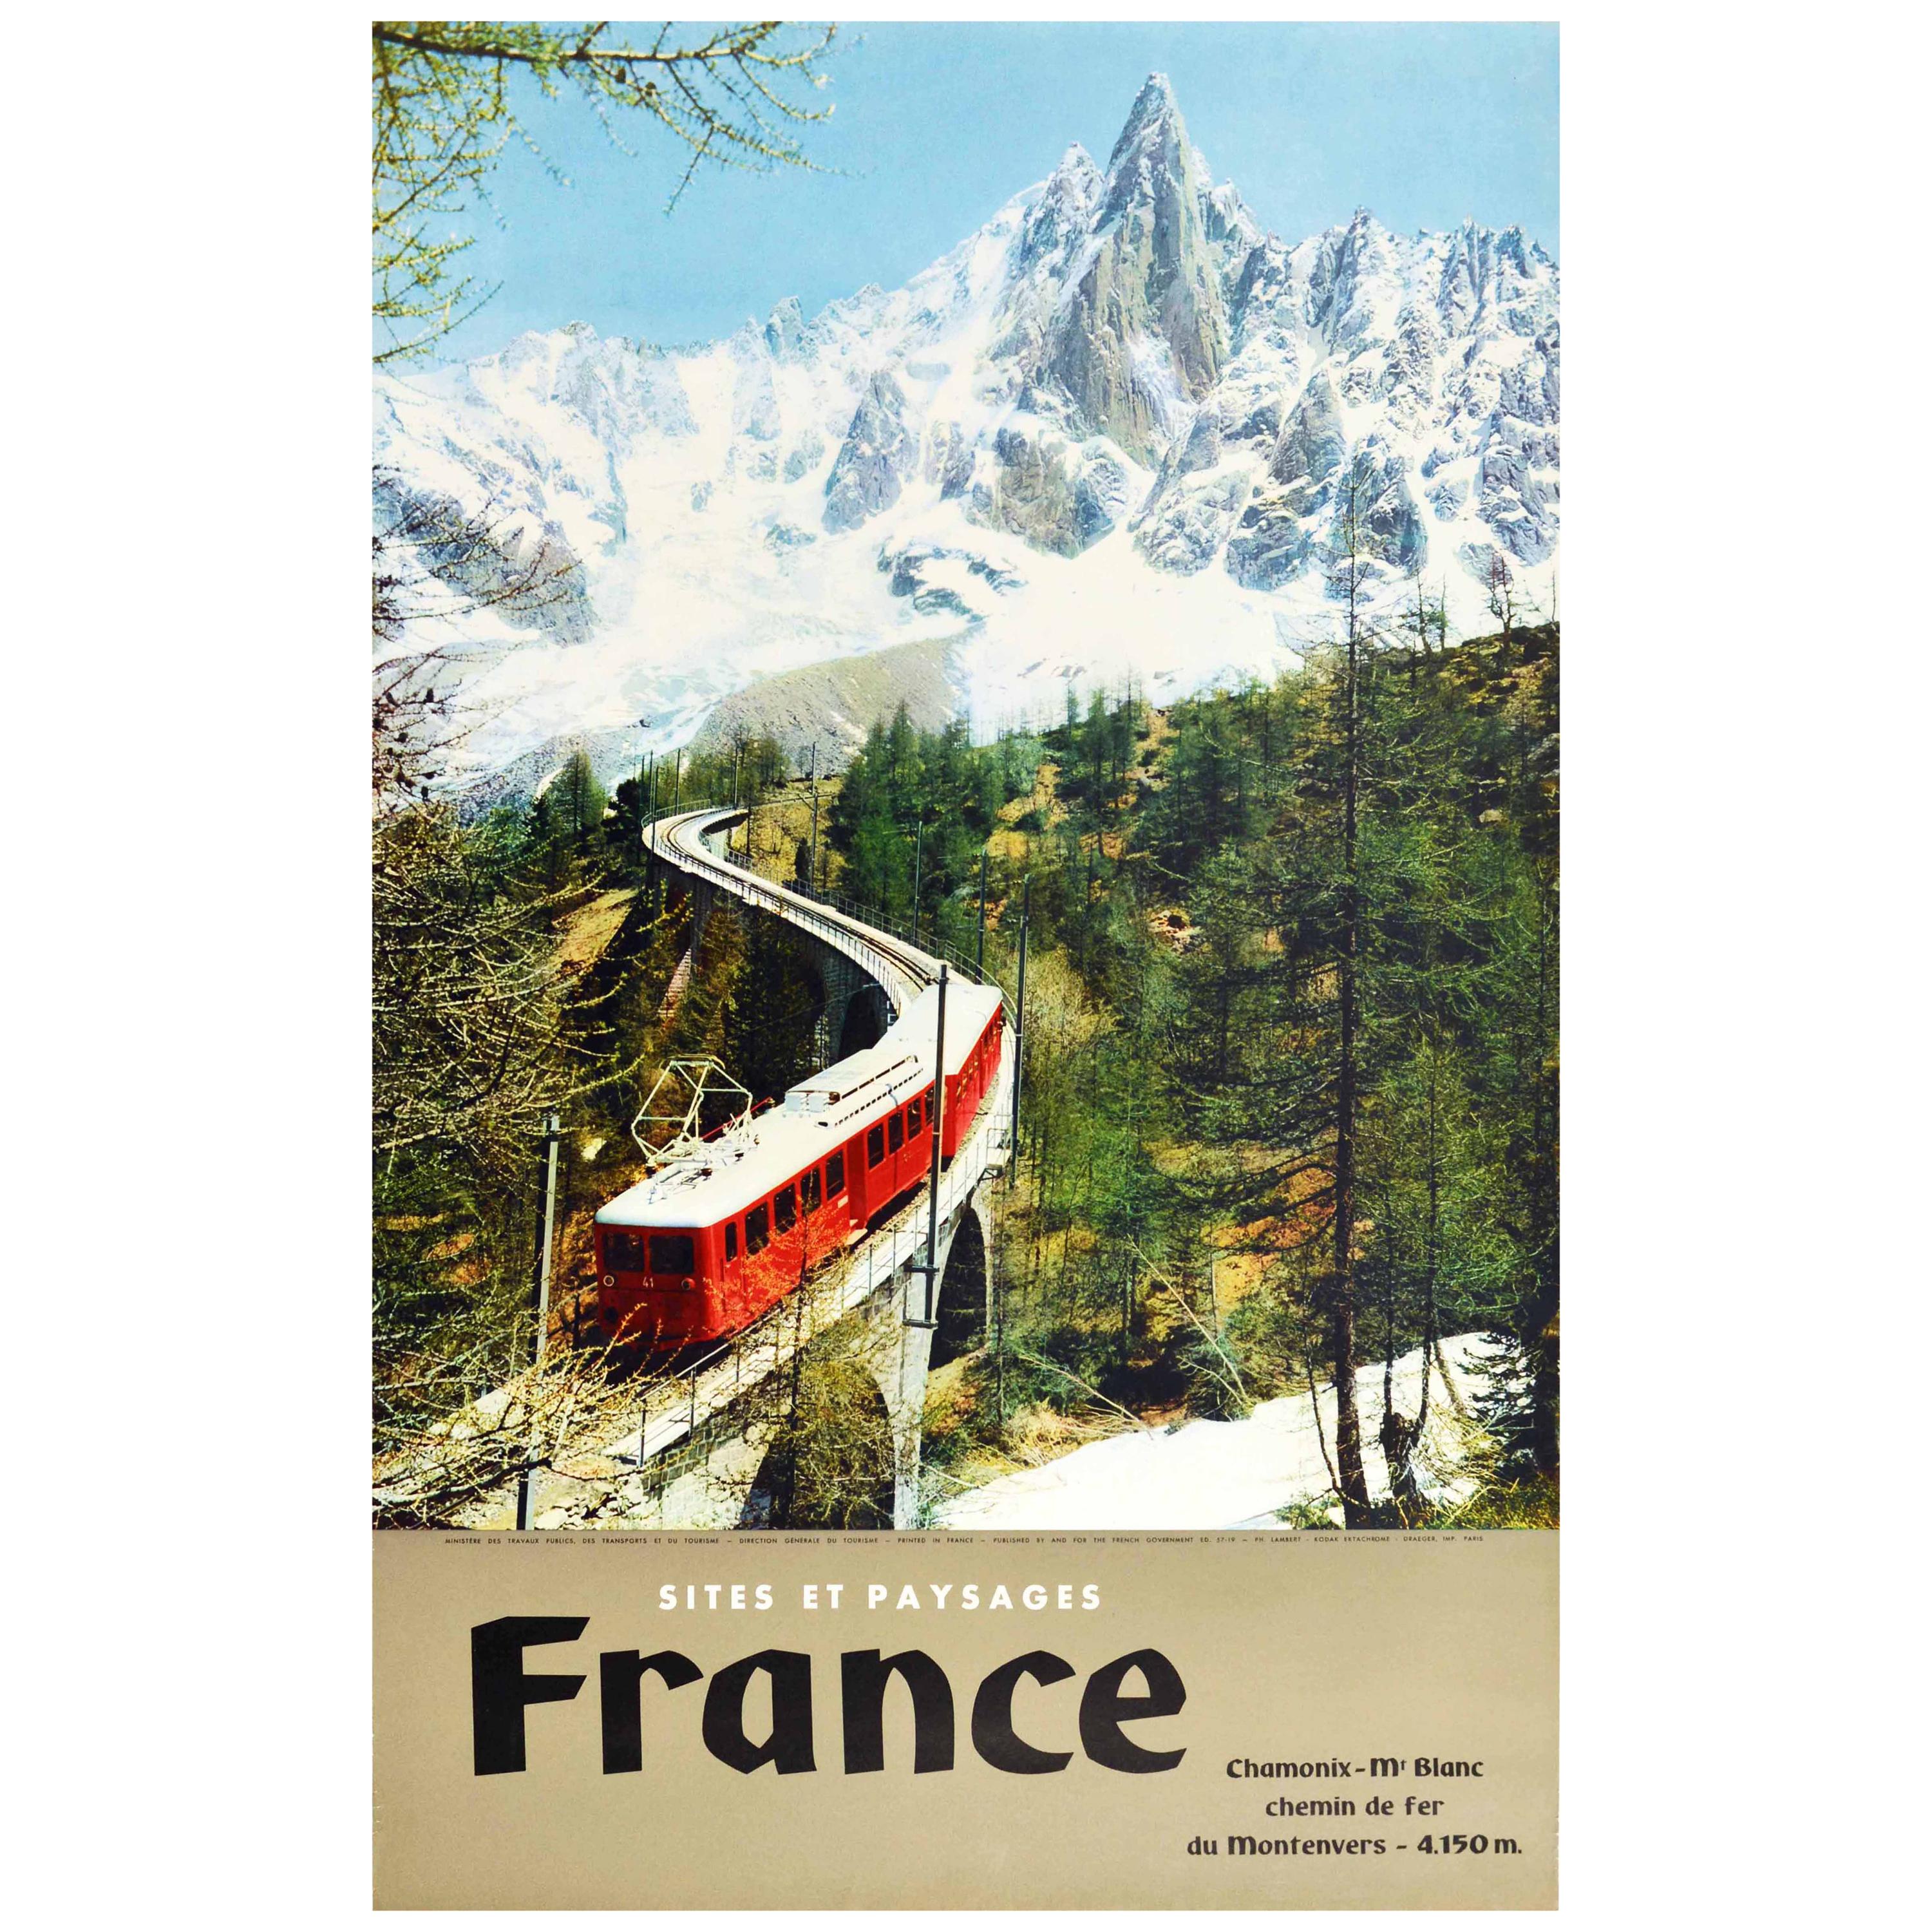 TT89 Vintage 1920's Chamonix Mont Blanc Winter Olympics Travel Poster RePrint A4 